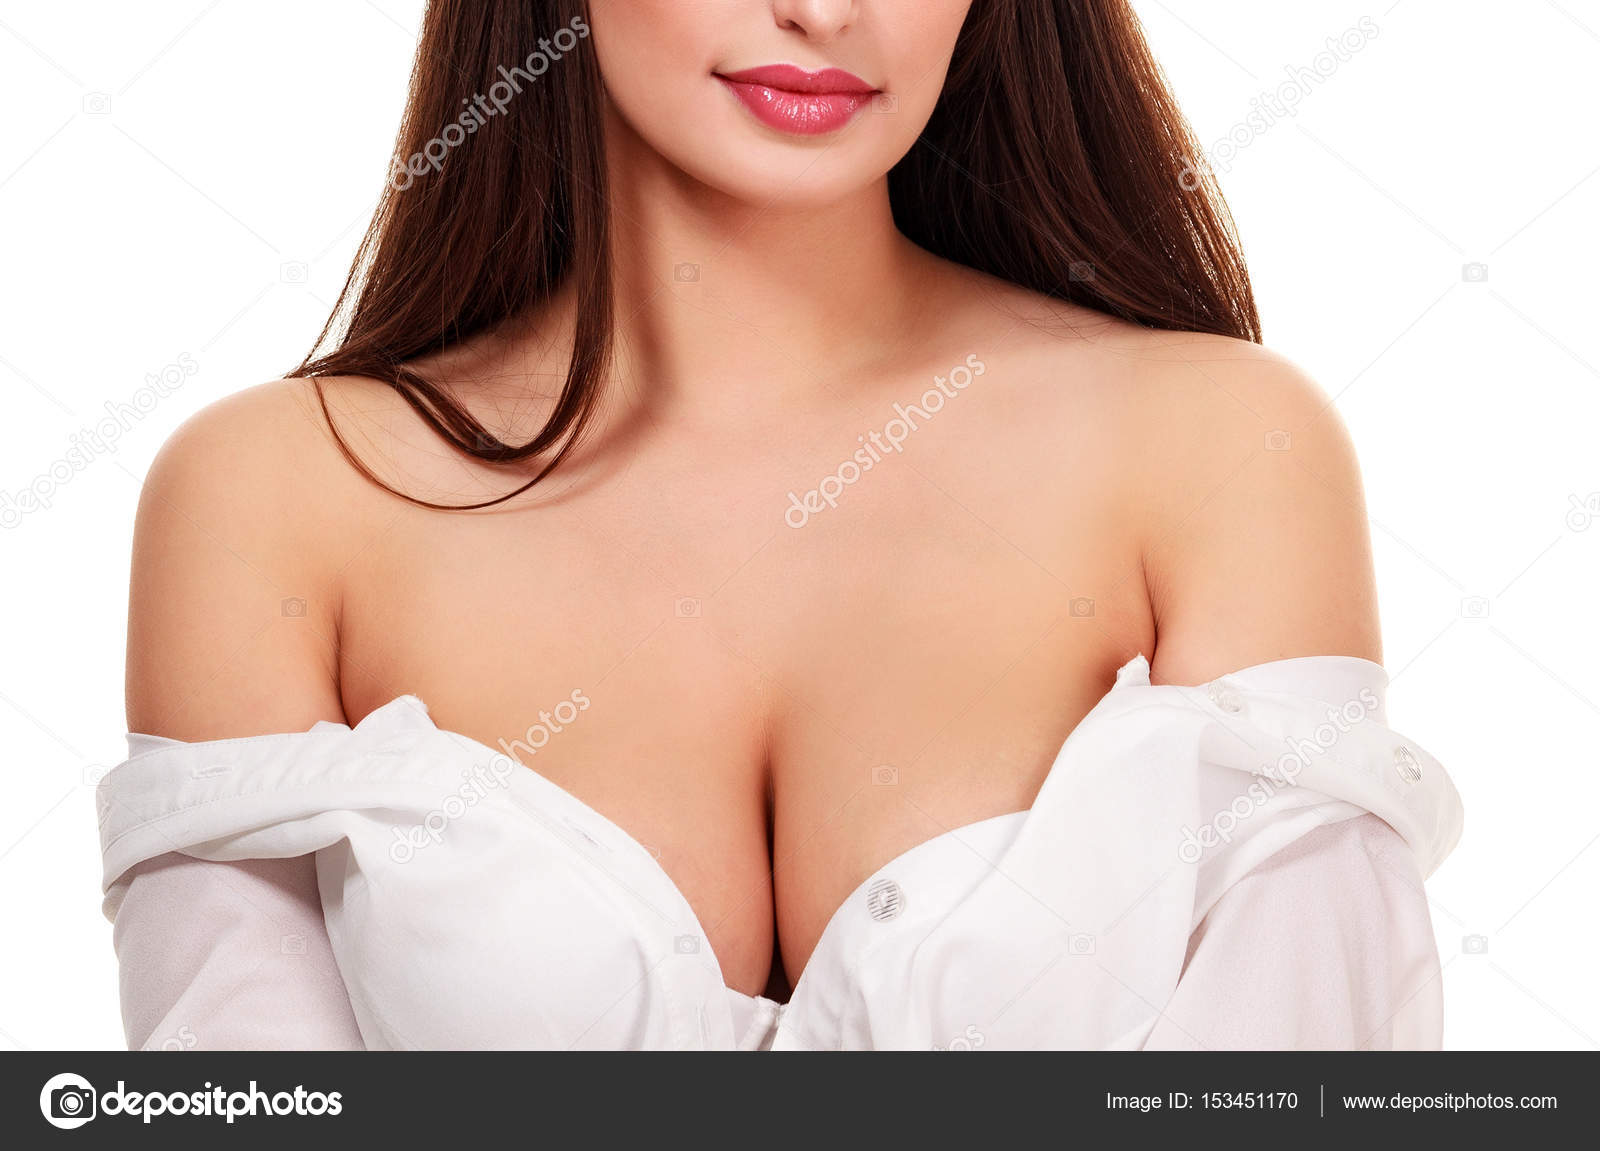 Undressing boobs